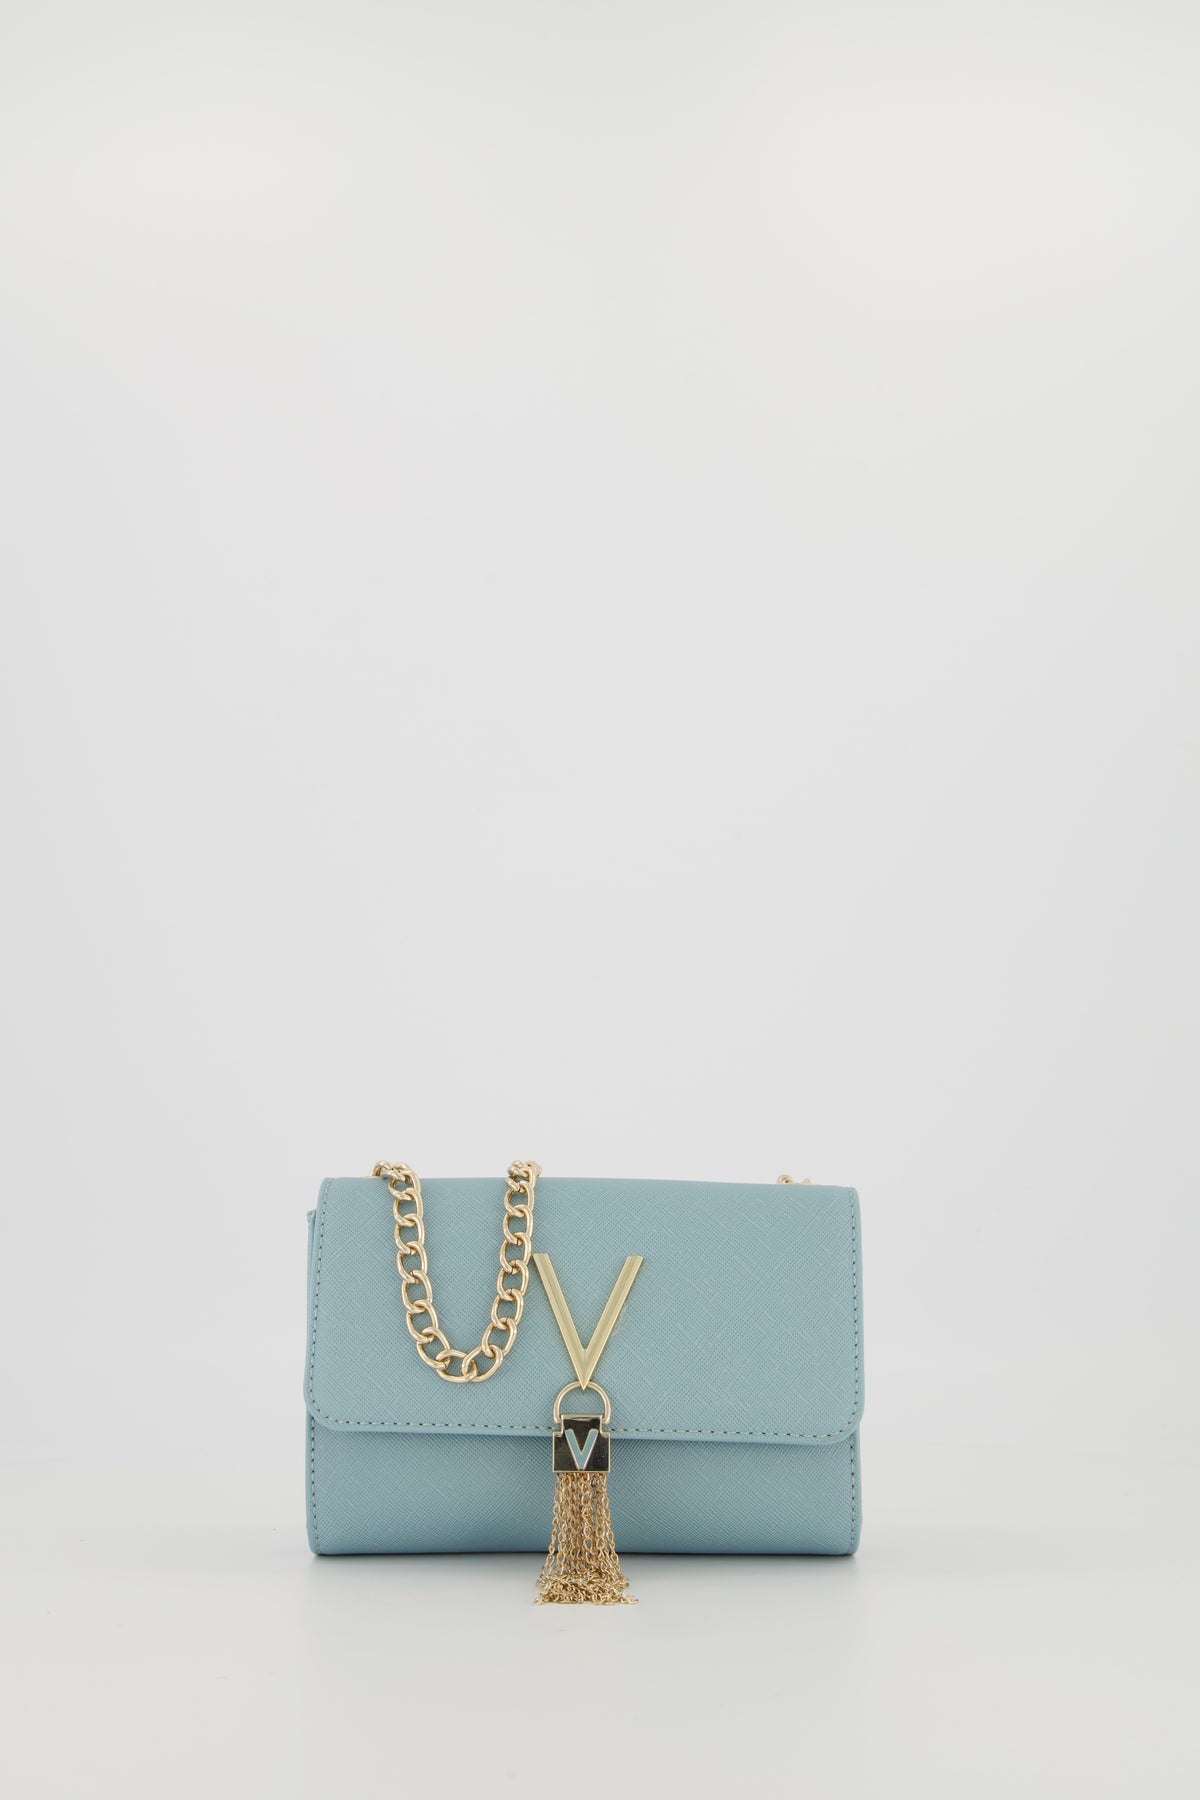 Valentino Mini Bags & Handbags for Women | Authenticity Guaranteed | eBay